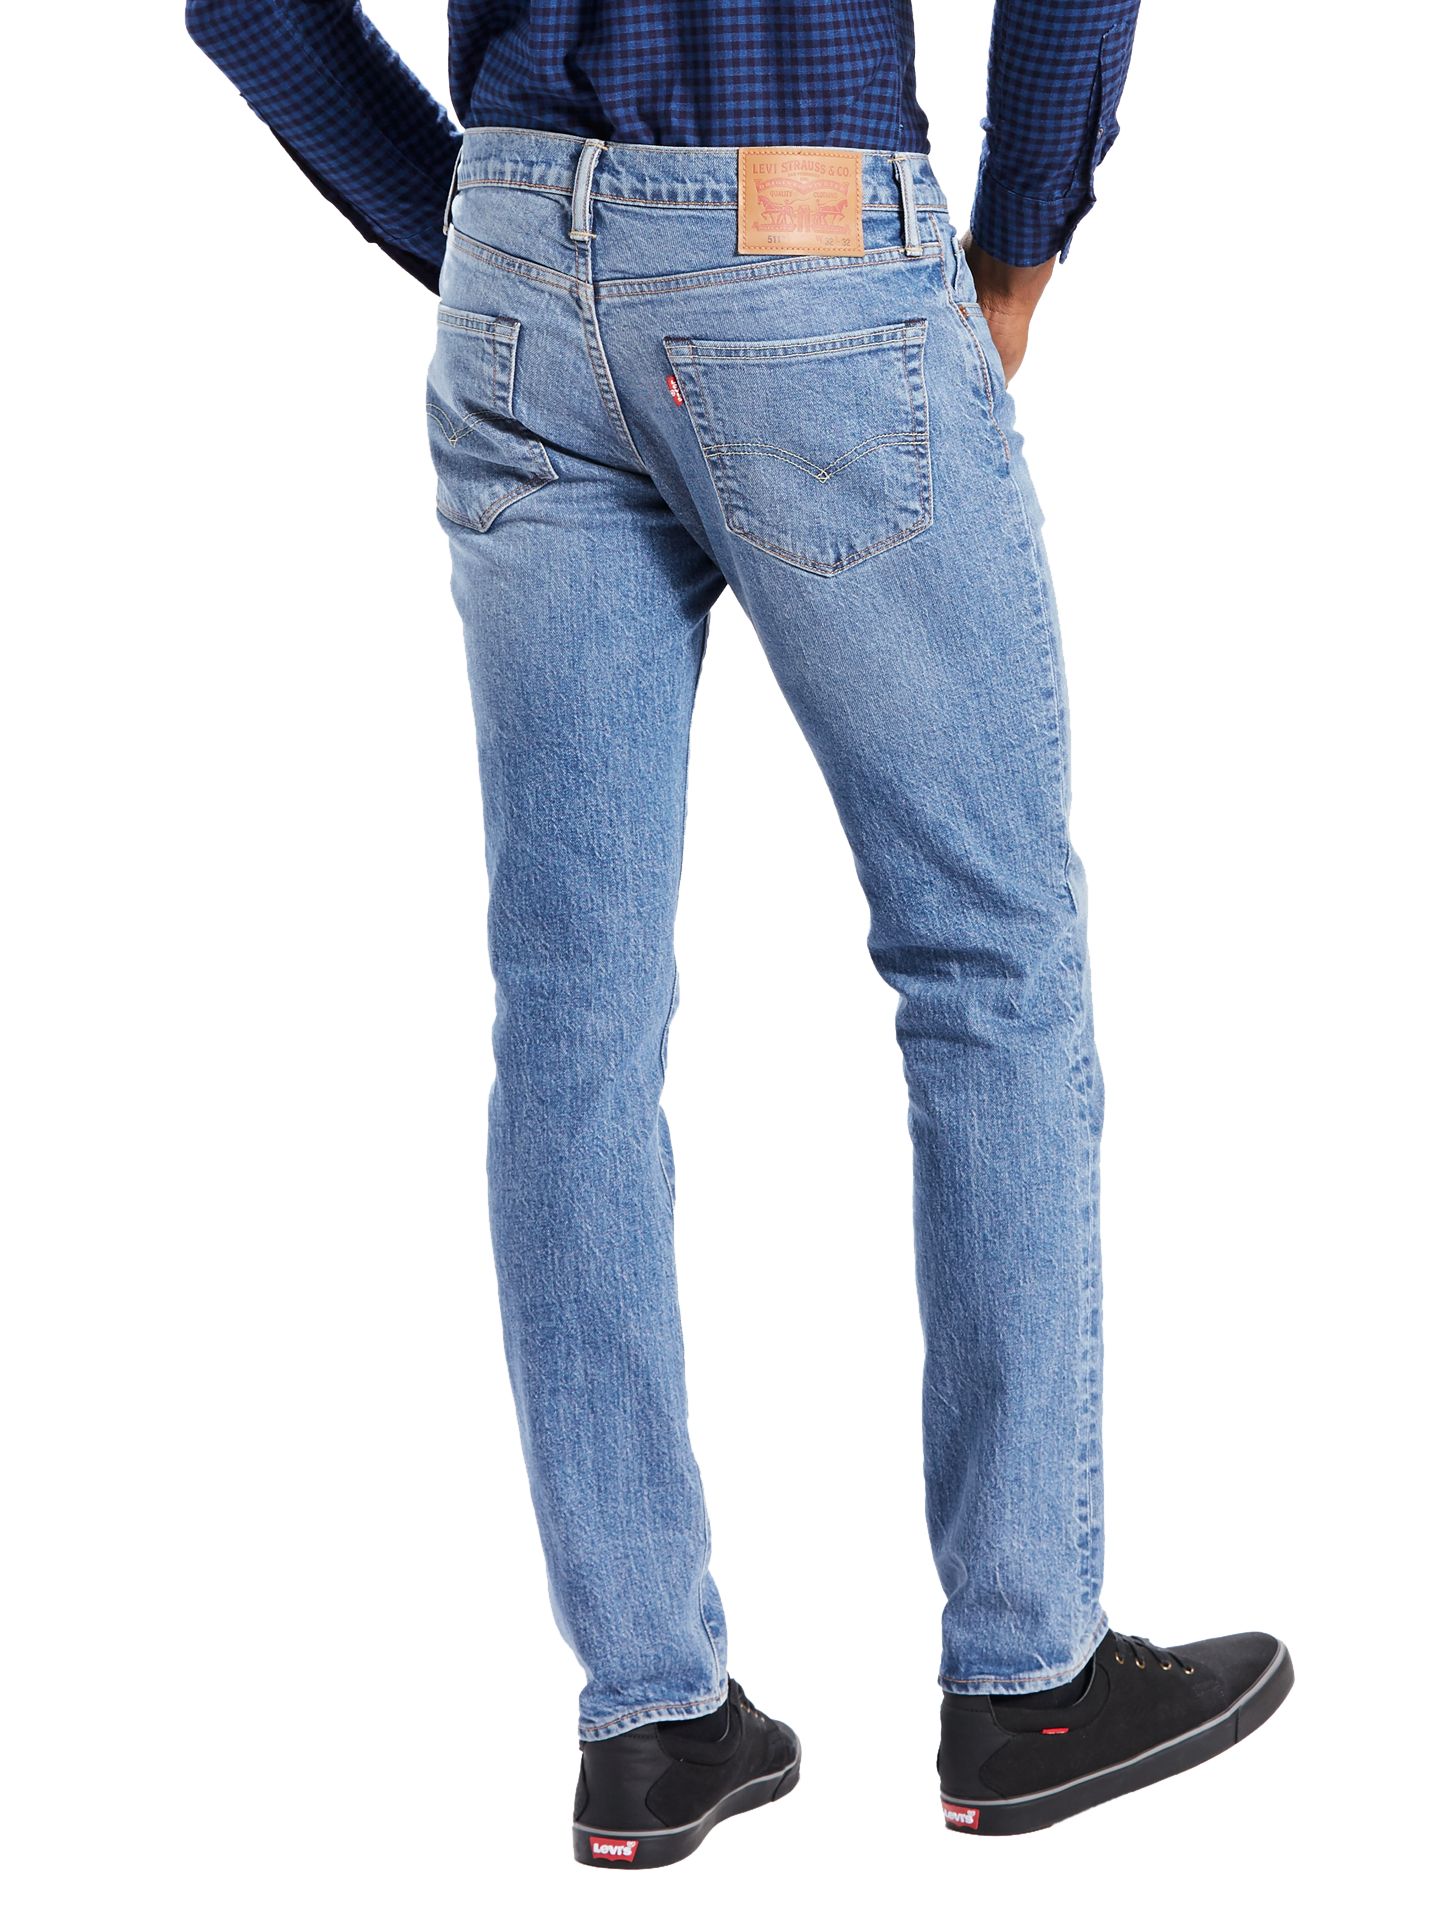 Levi's 511 Slim Jeans, Thunderbird at 